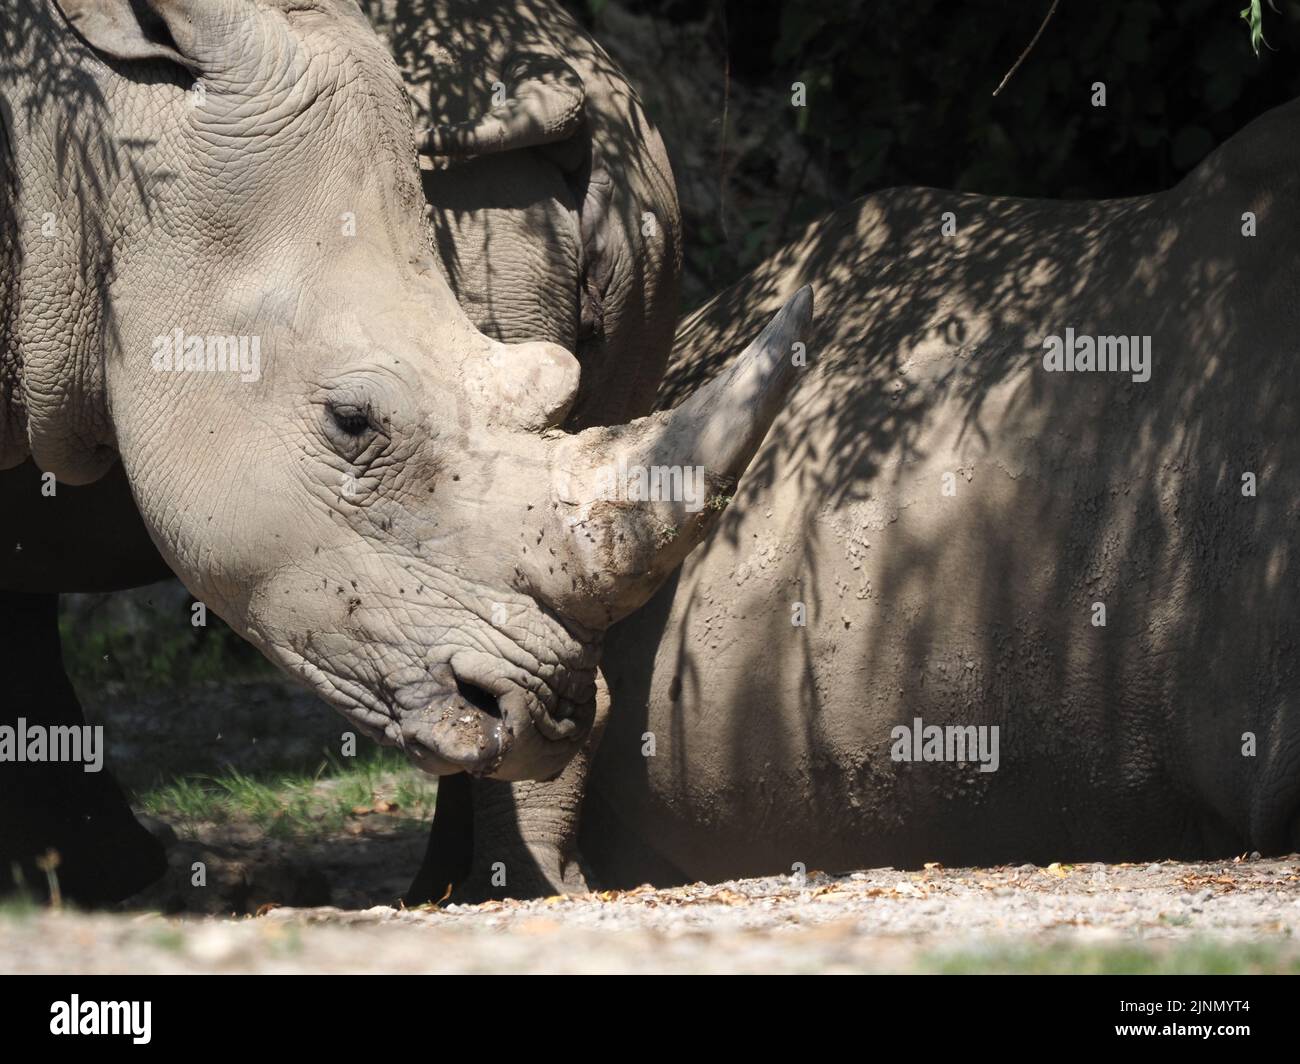 Southern white rhinoceros (Ceratotherium simum simum) at the Salzburg Zoo Stock Photo